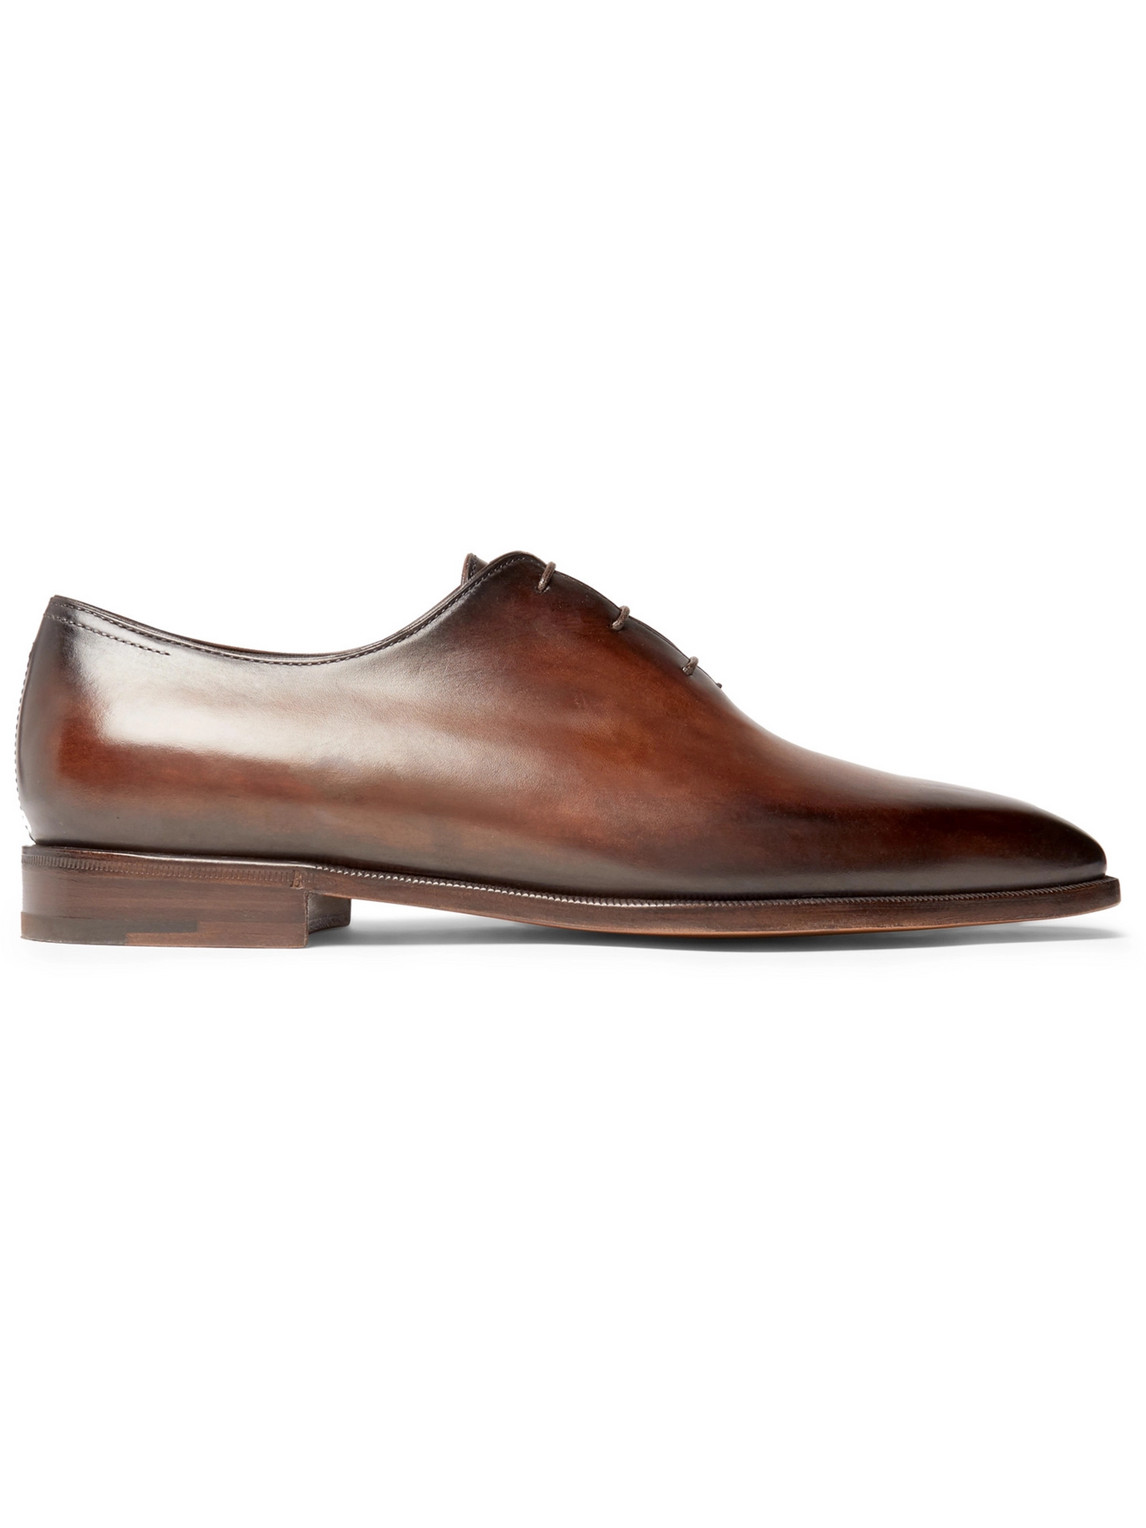 Berluti - Blake Whole-Cut Venezia Leather Oxford Shoes - Men - Brown - UK 8.5 von Berluti